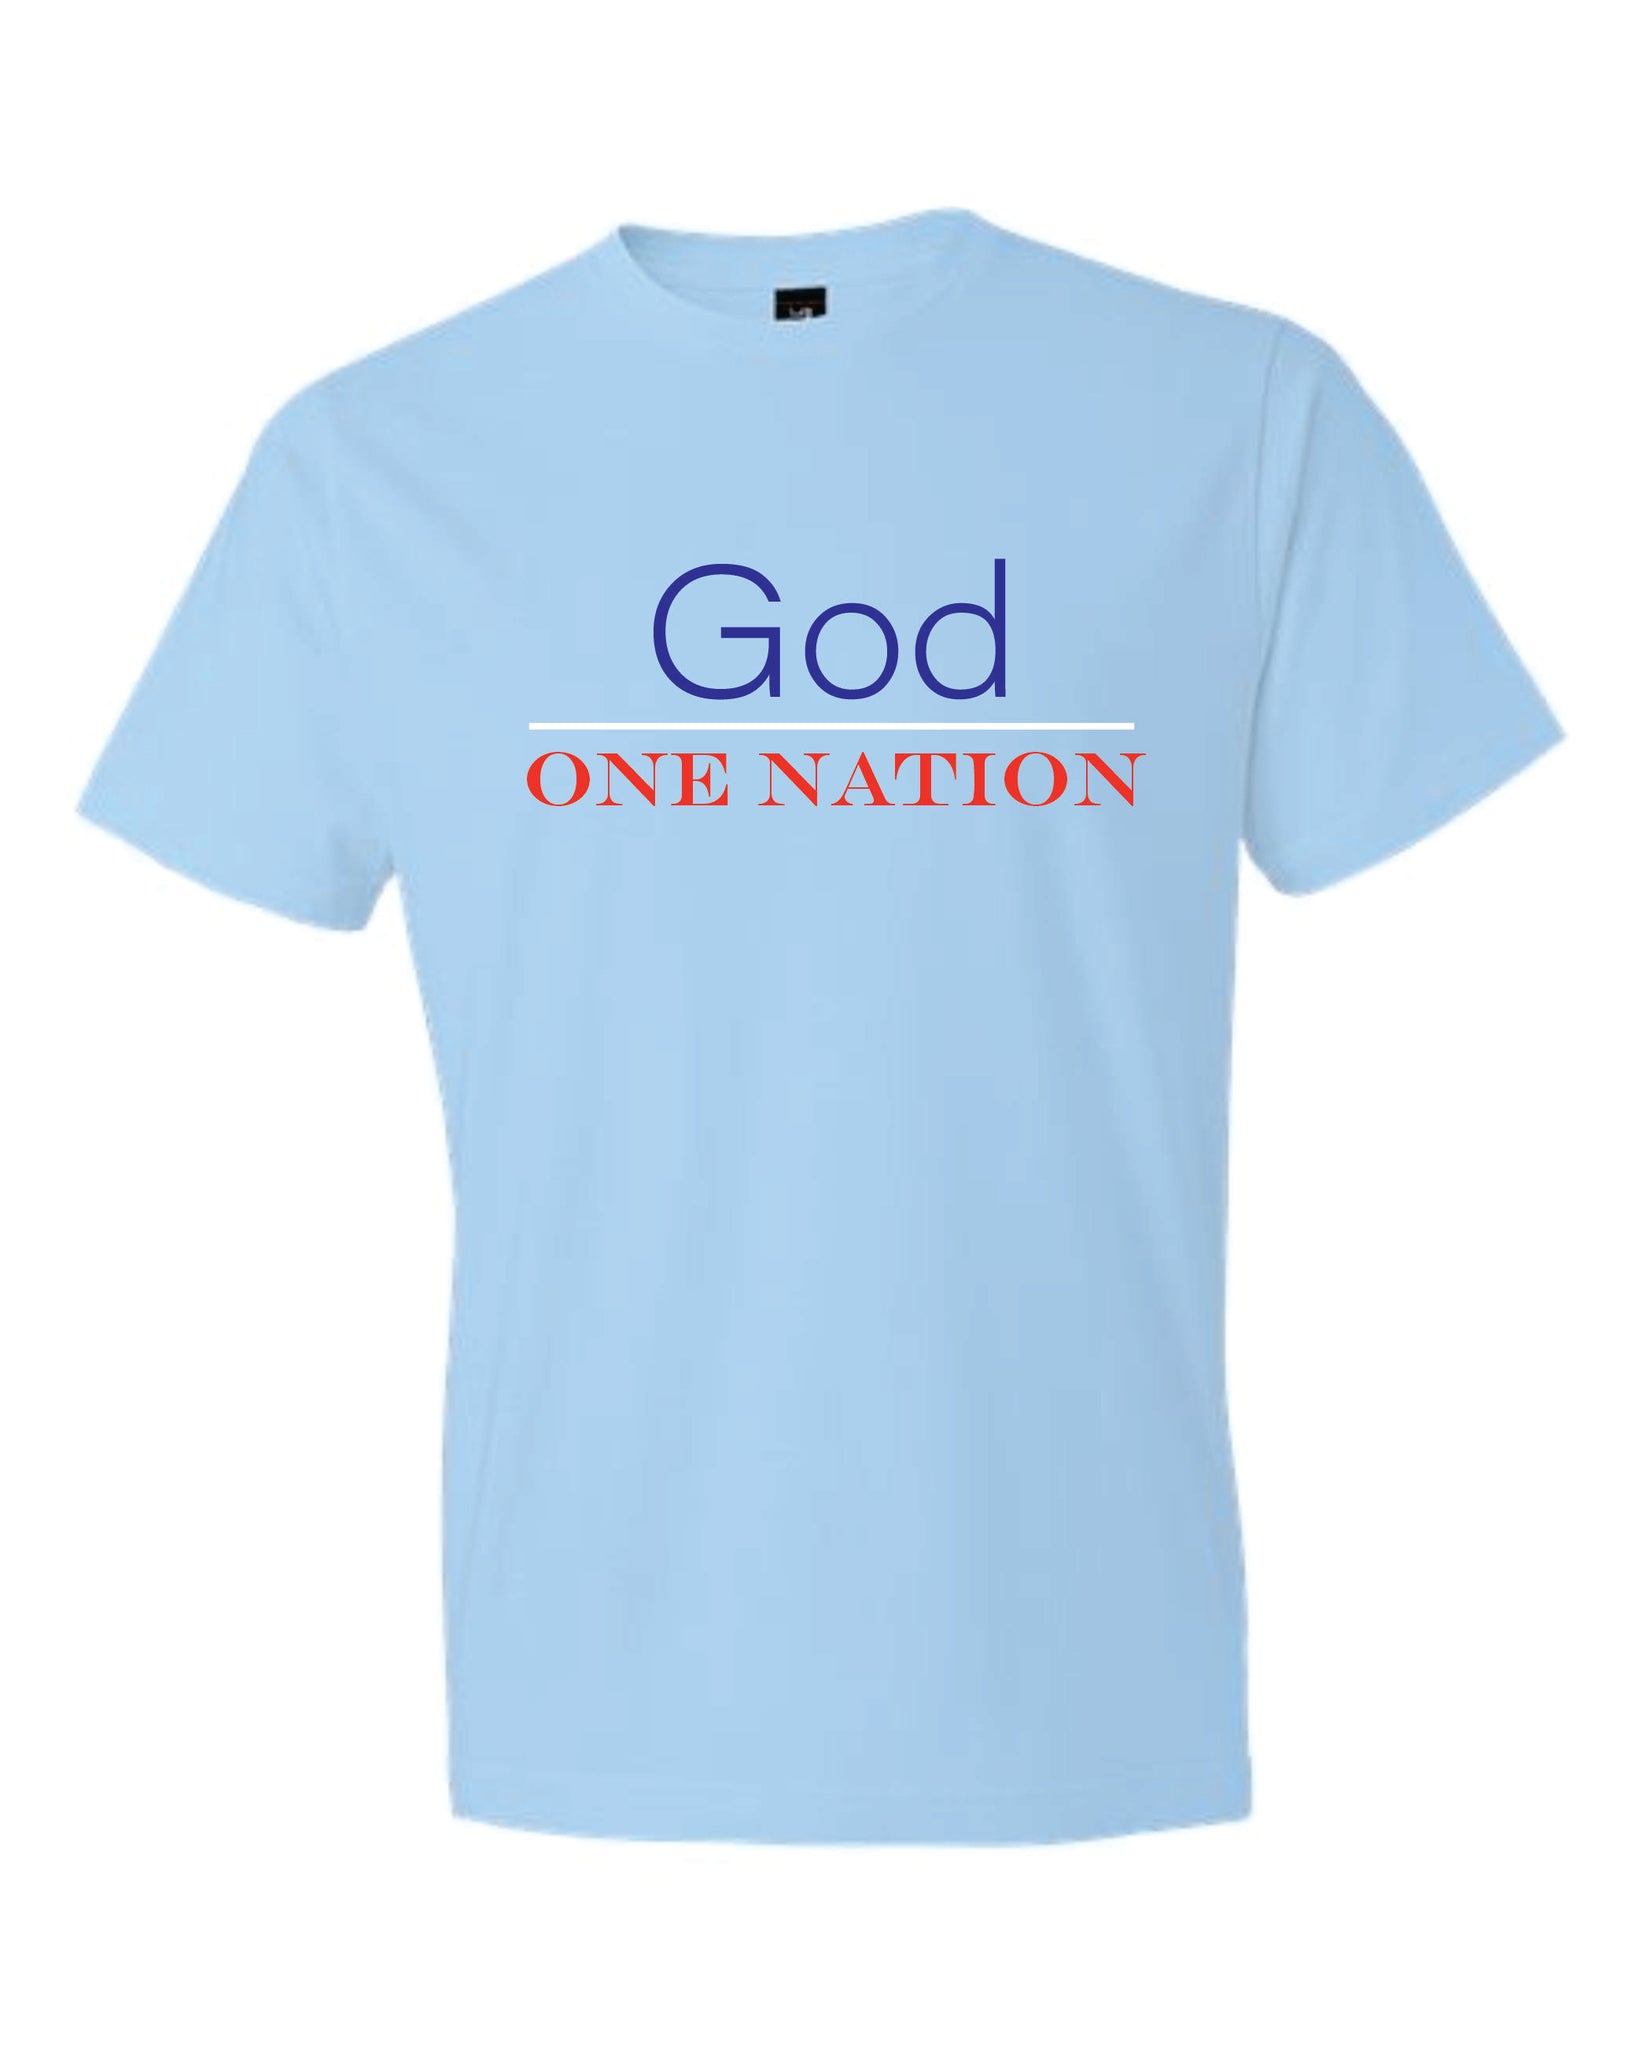 One Nation Under God T-Shirt (2 colors)